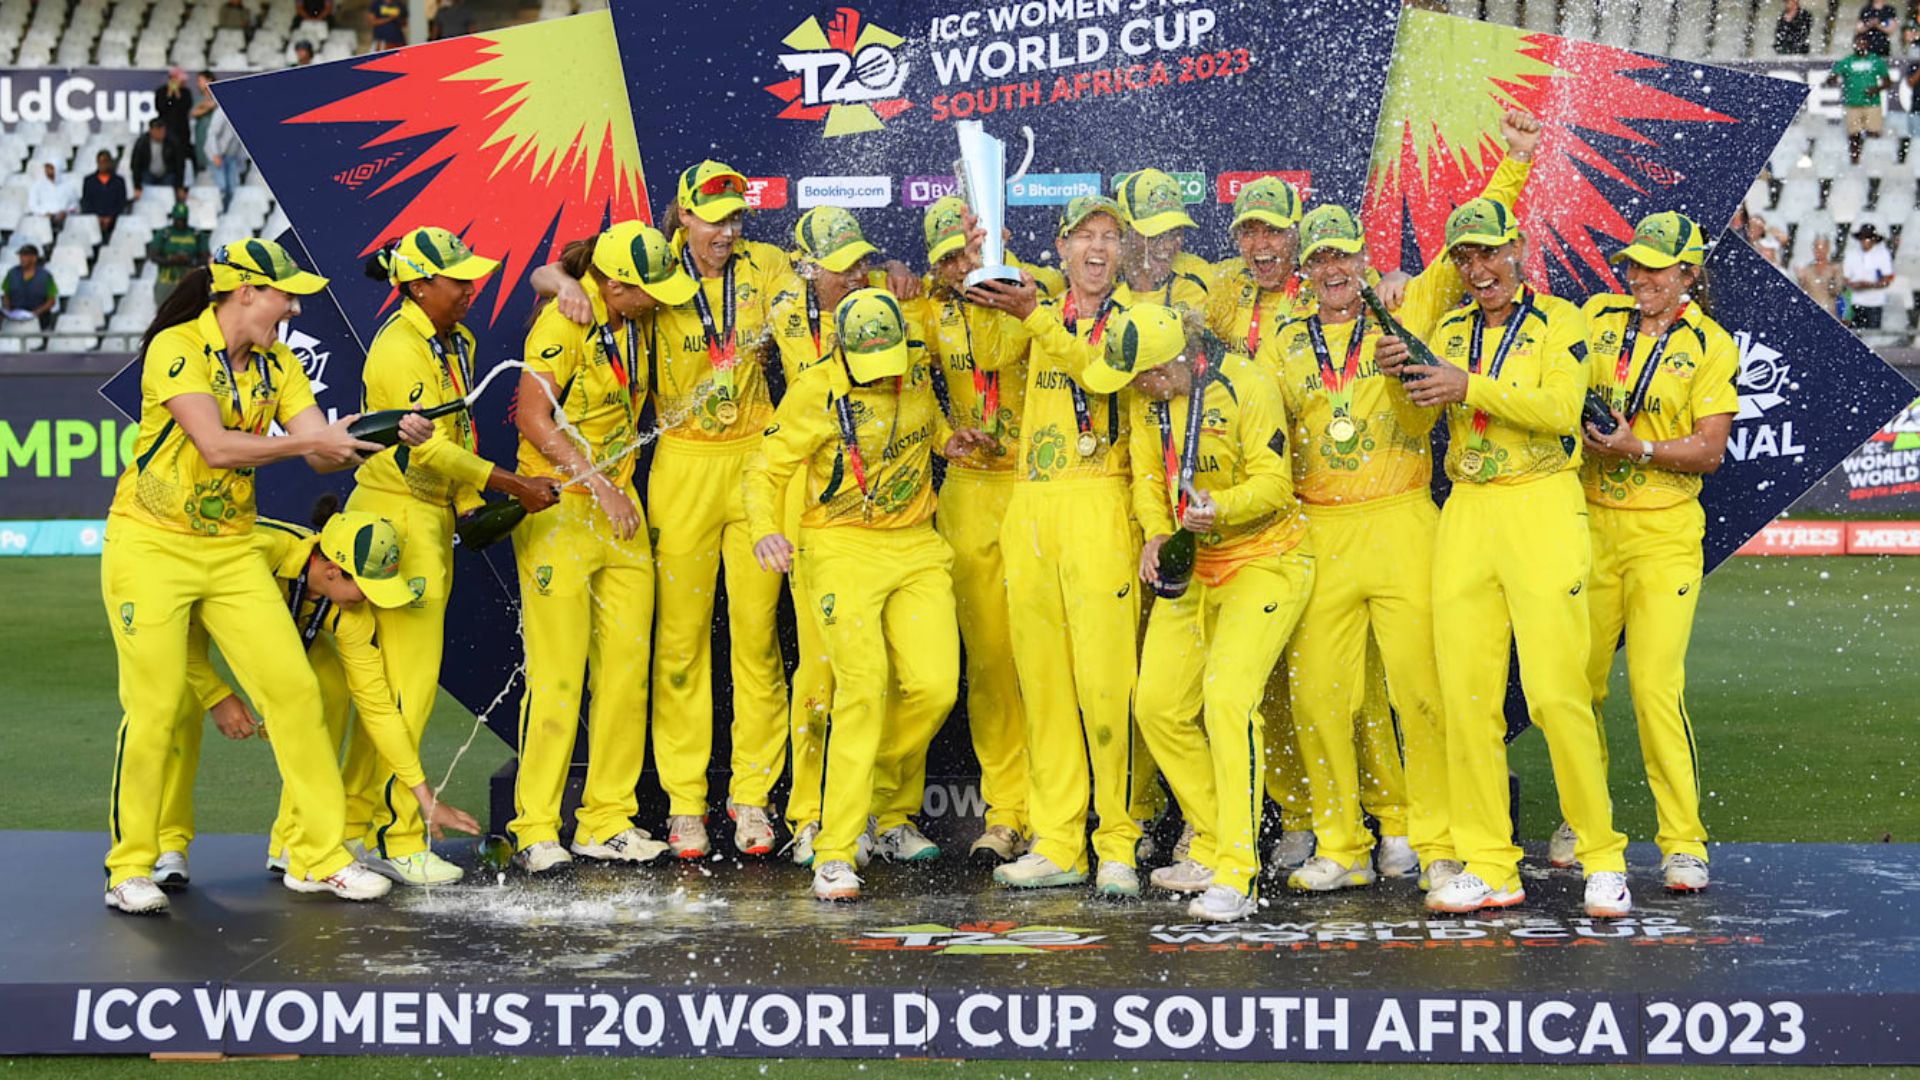 Women’s T20 World Cup winners Australian cricket team’s dominance unmatched - full list